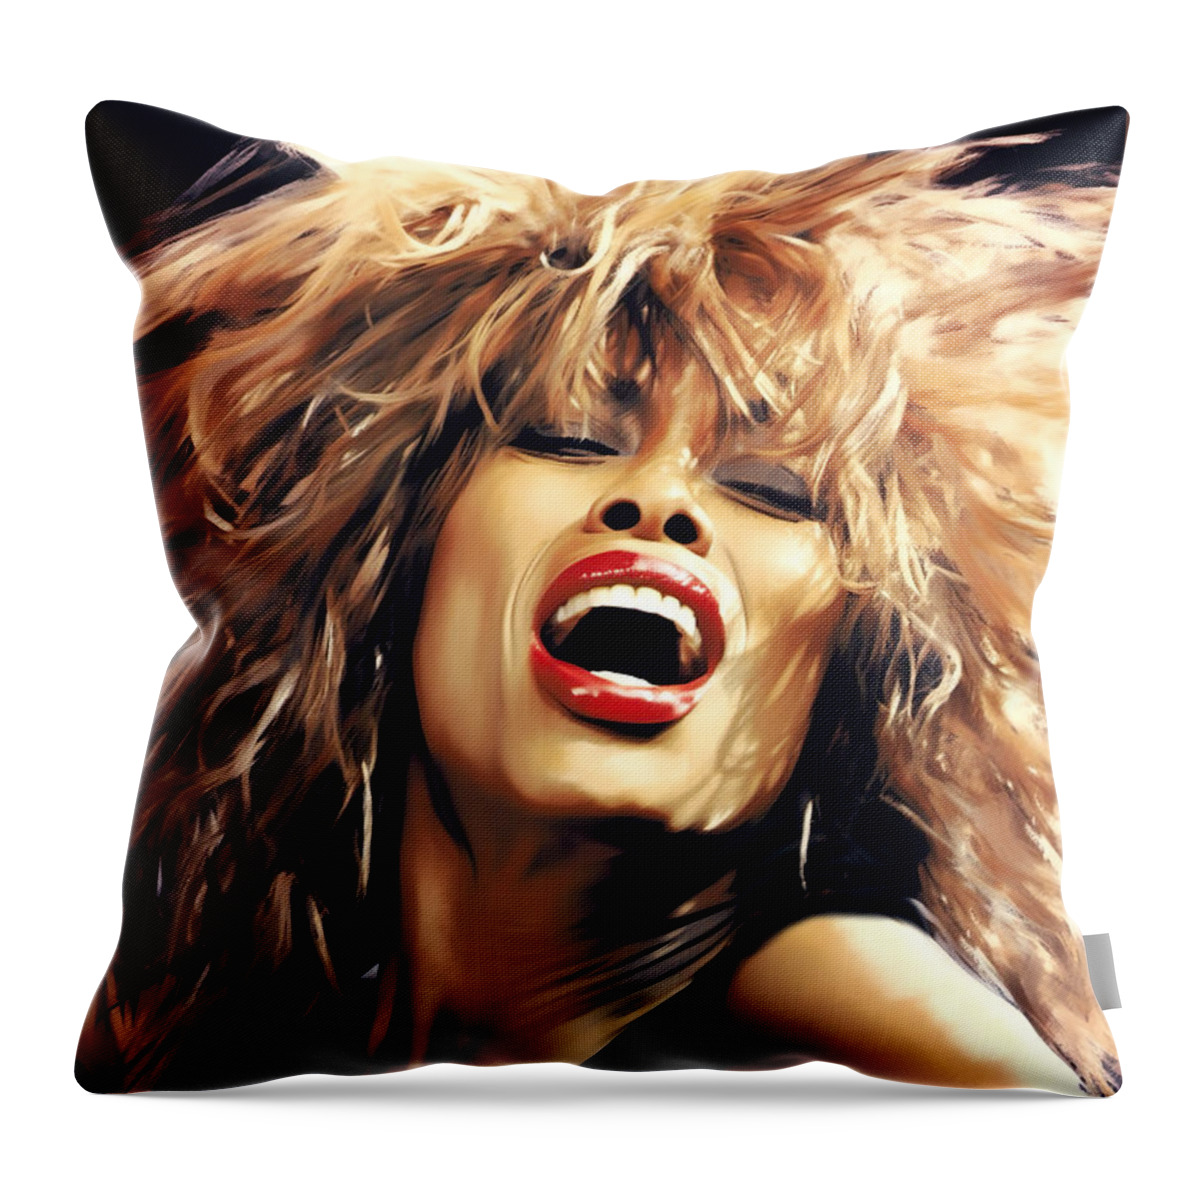 Tina Turner Throw Pillow featuring the painting Tina Turner by Mark Ashkenazi